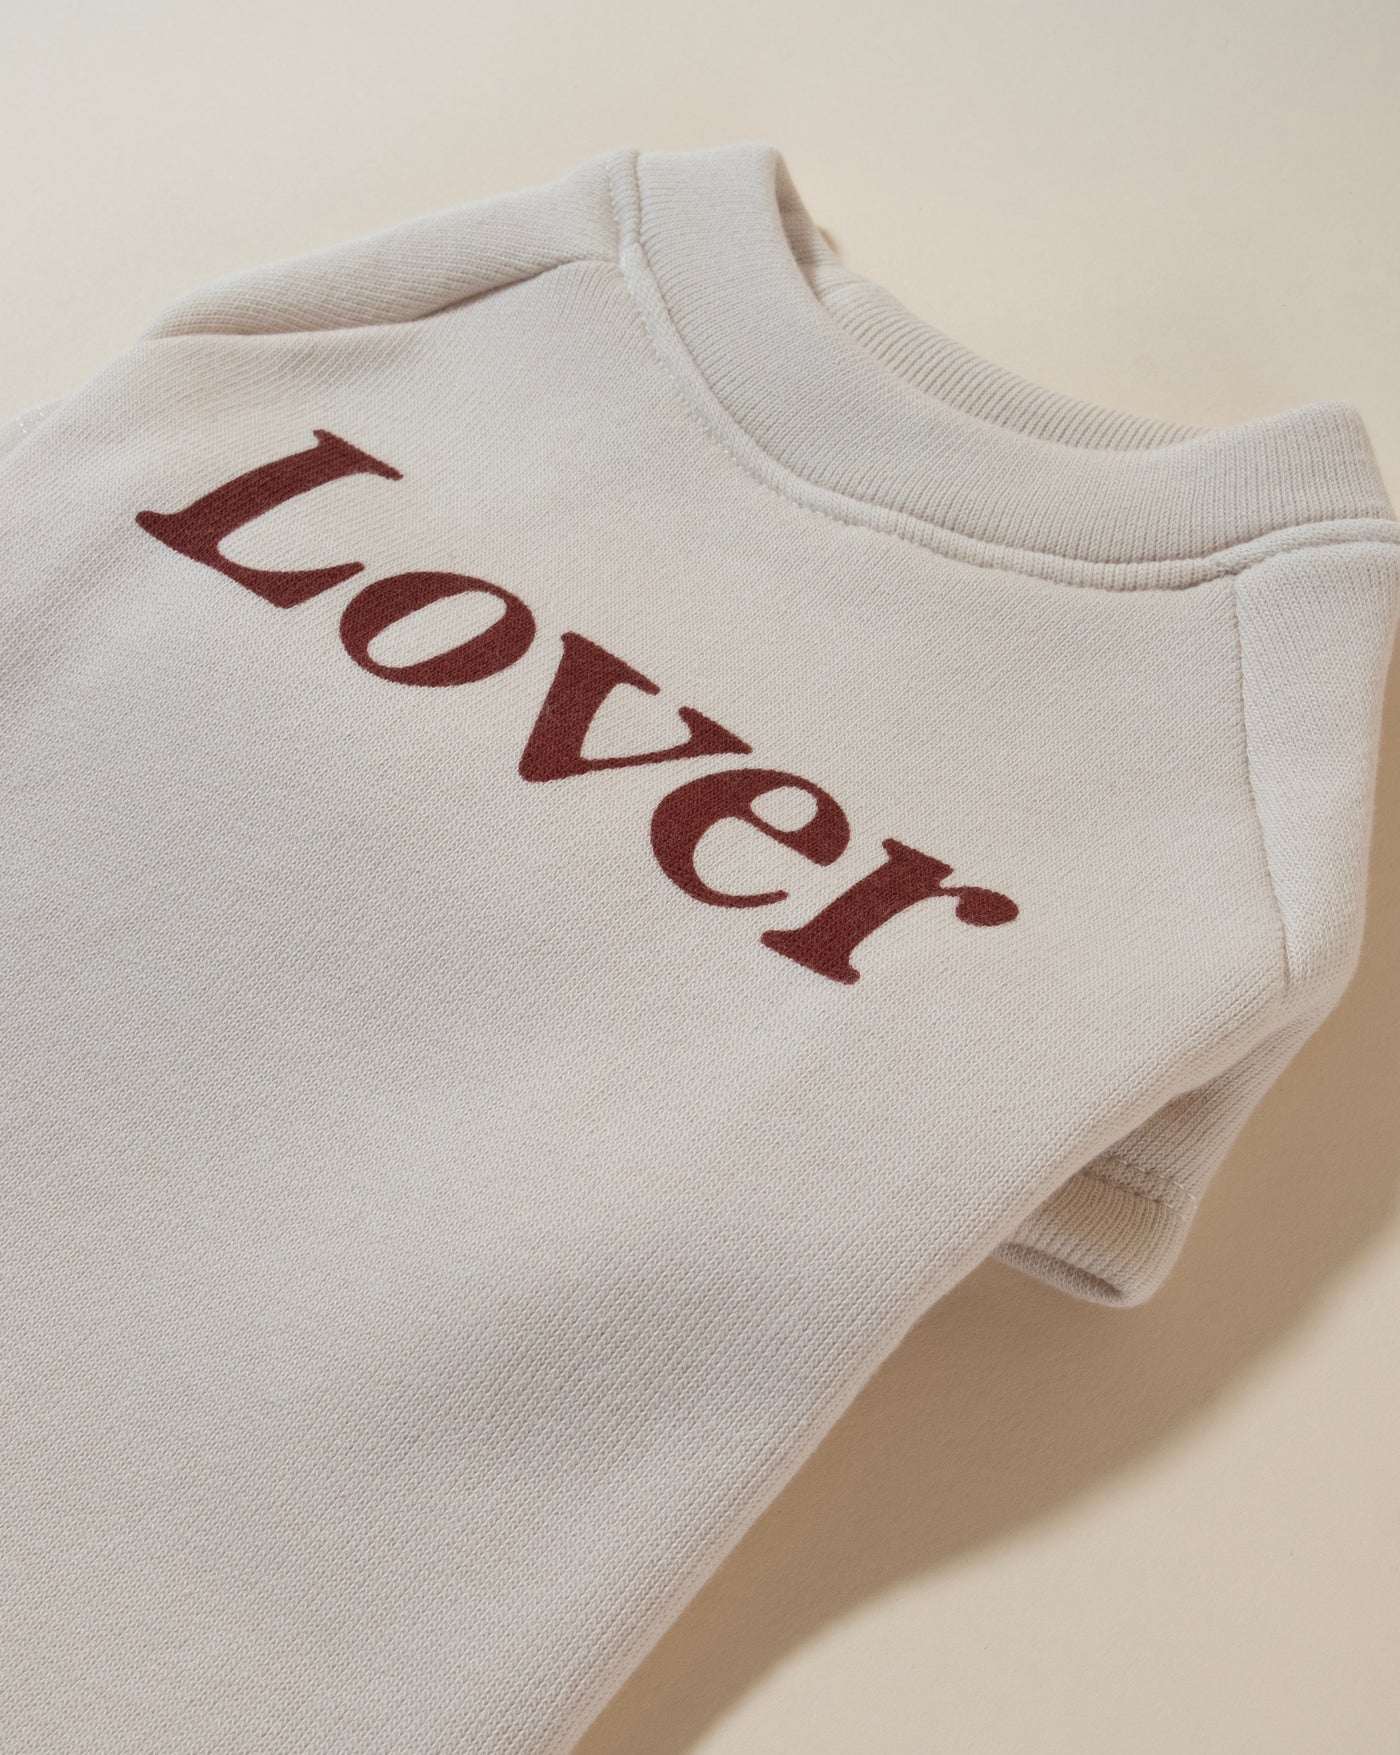 Lil' Lover Dog Sweatshirt